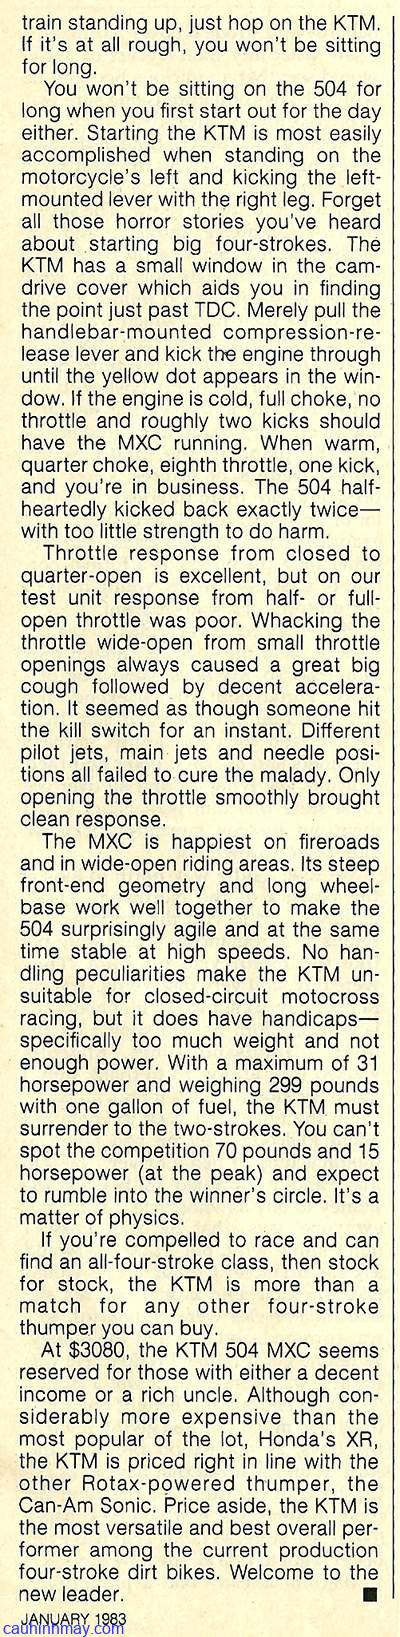 KTM 504 MXC - cauhinhmay.com